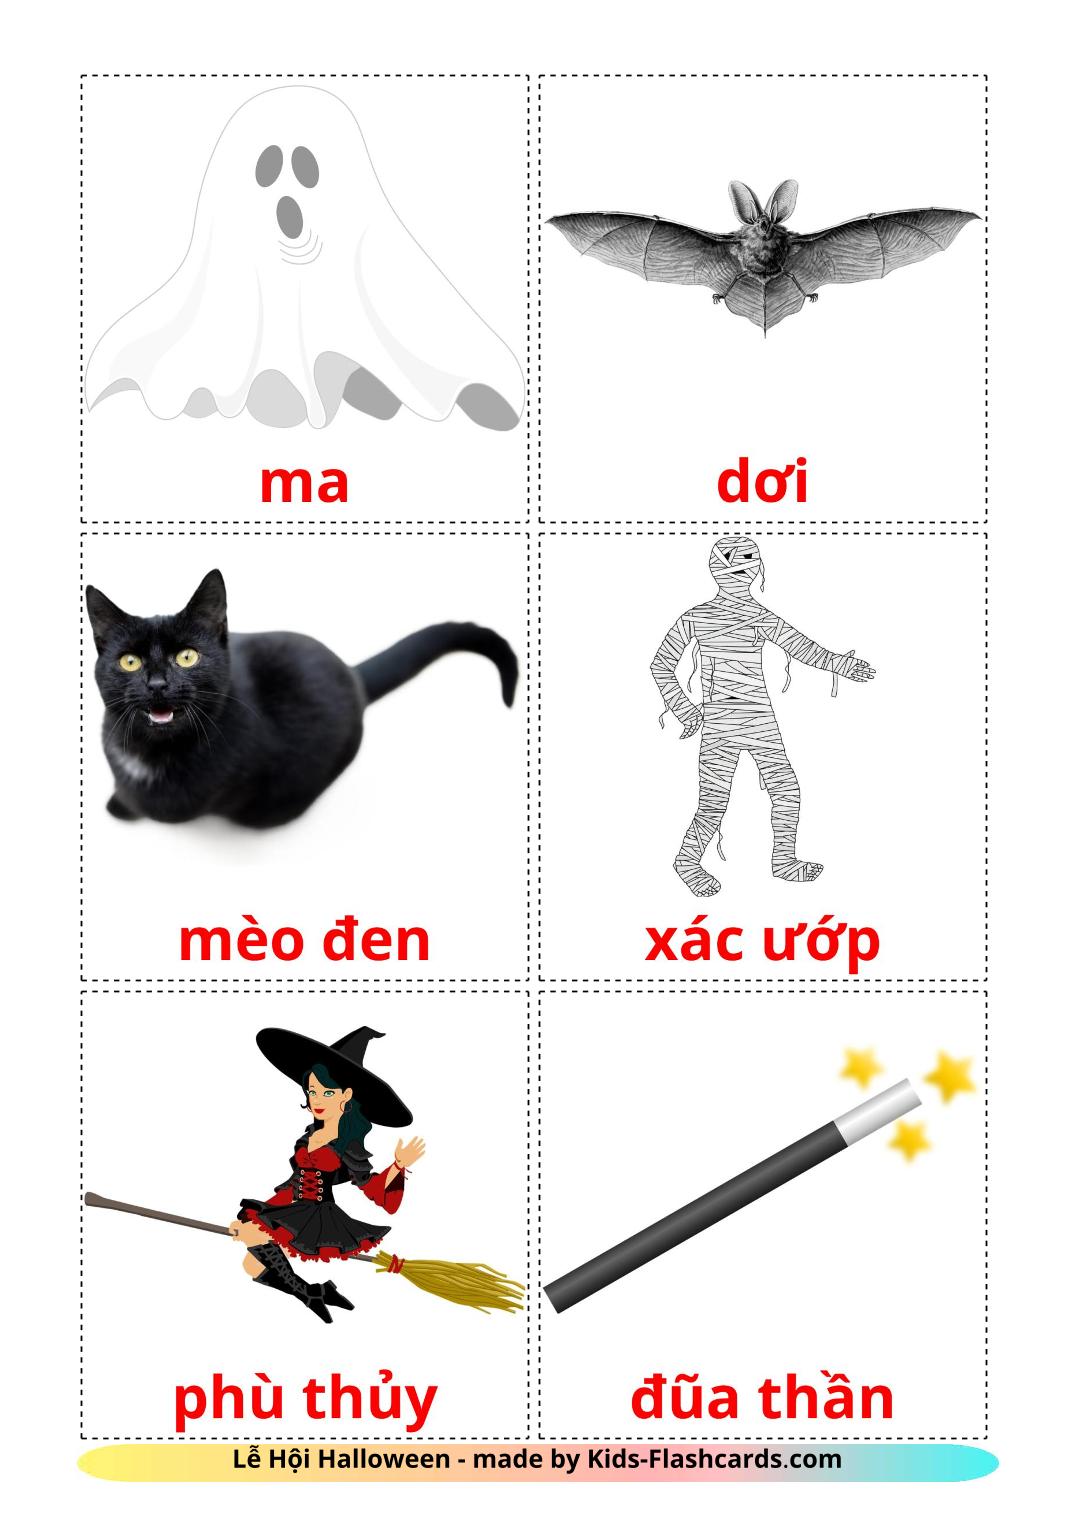 Halloween - 16 flashcards vietnamita stampabili gratuitamente